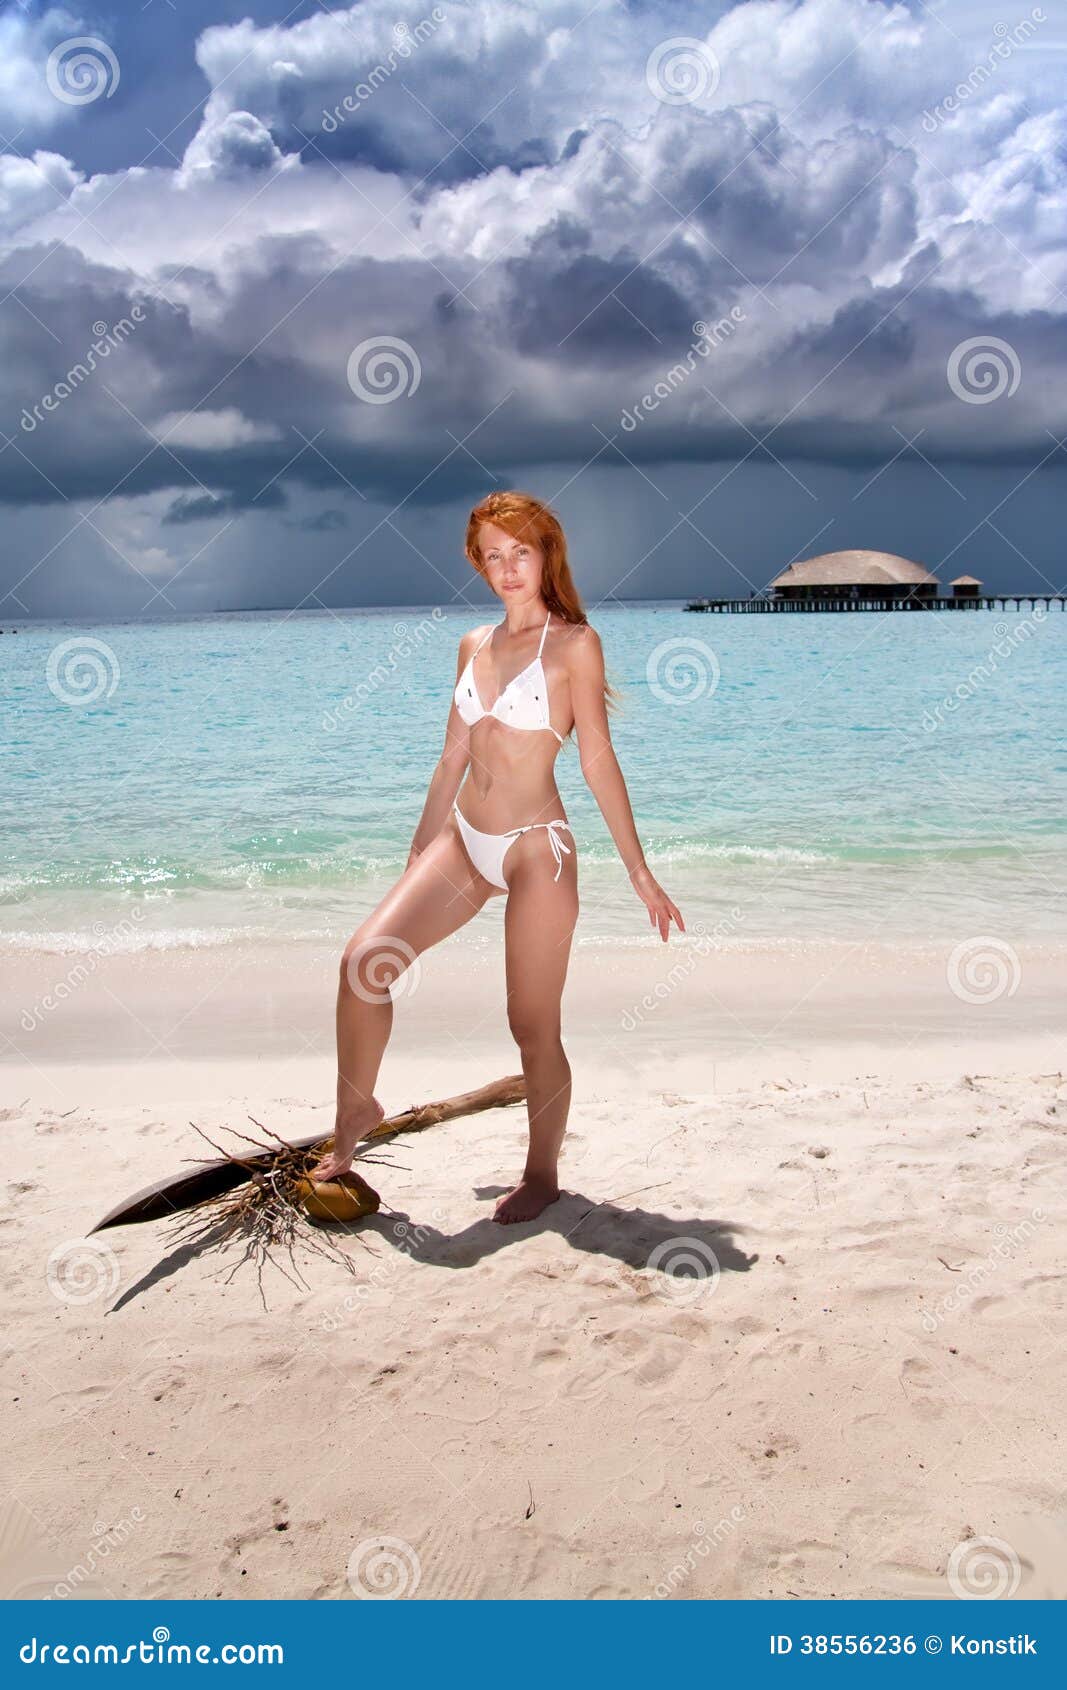 Виктория Тарасова в купальнике на пляже